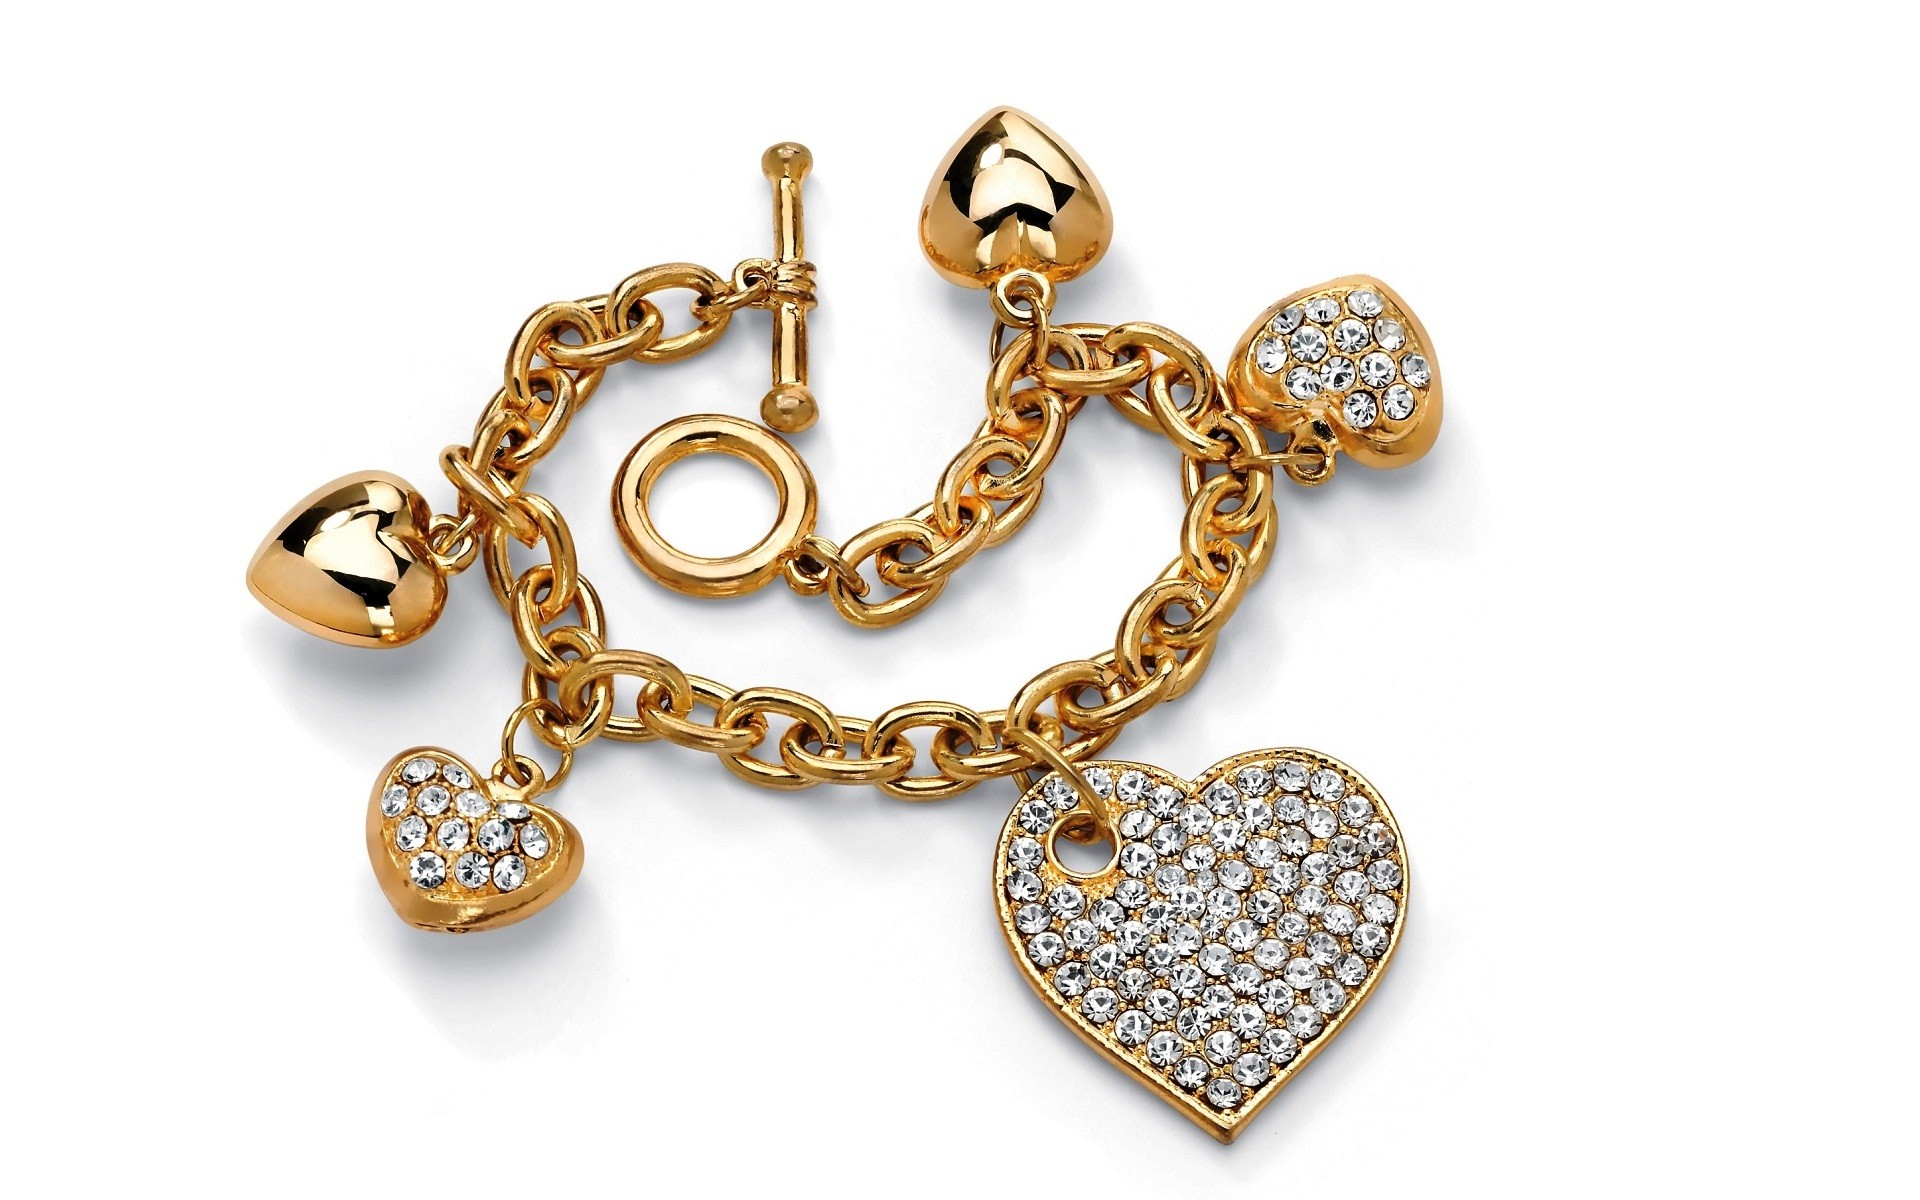 1920x1200 Latest gold and diamond jewellery gift - New hd .